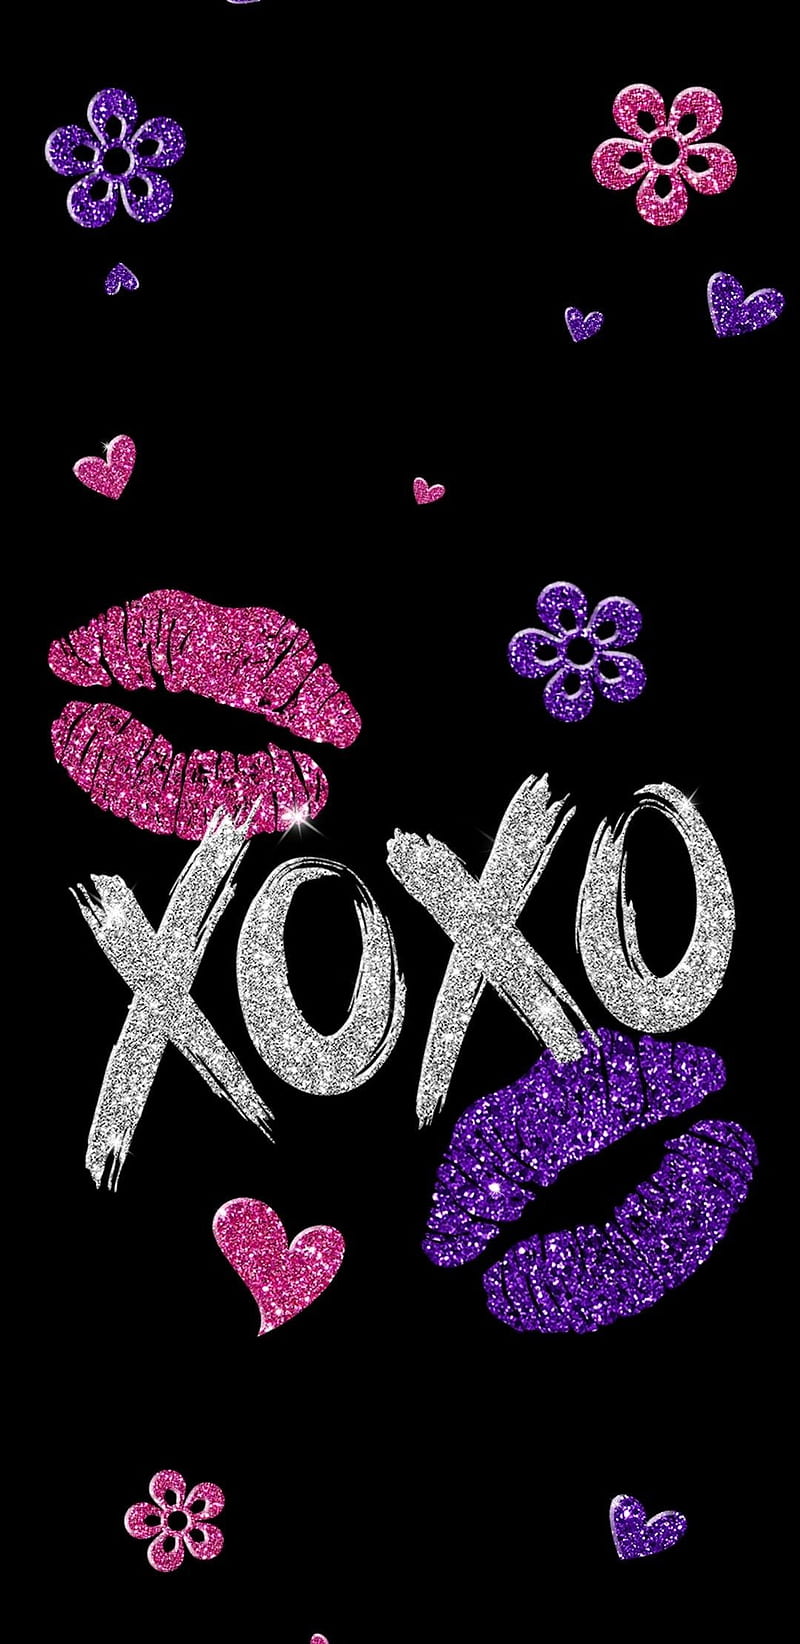 Xoxo, girly, glitter, corazones, kiss, kisses, love, pink, pretty ...